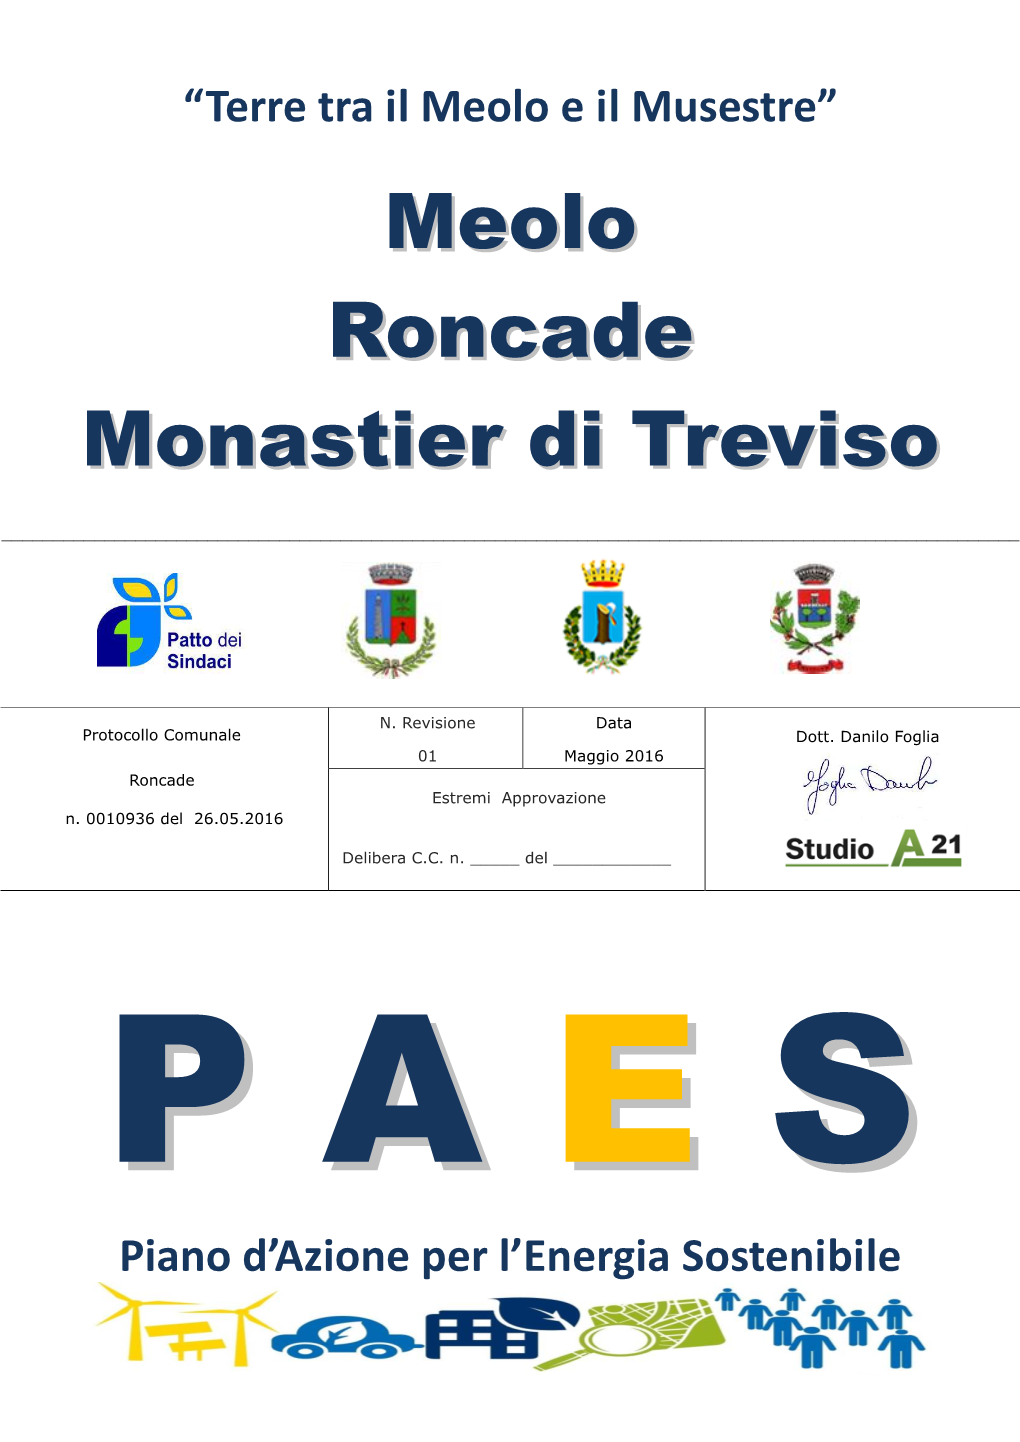 Meolo Roncade Monastier Di Treviso